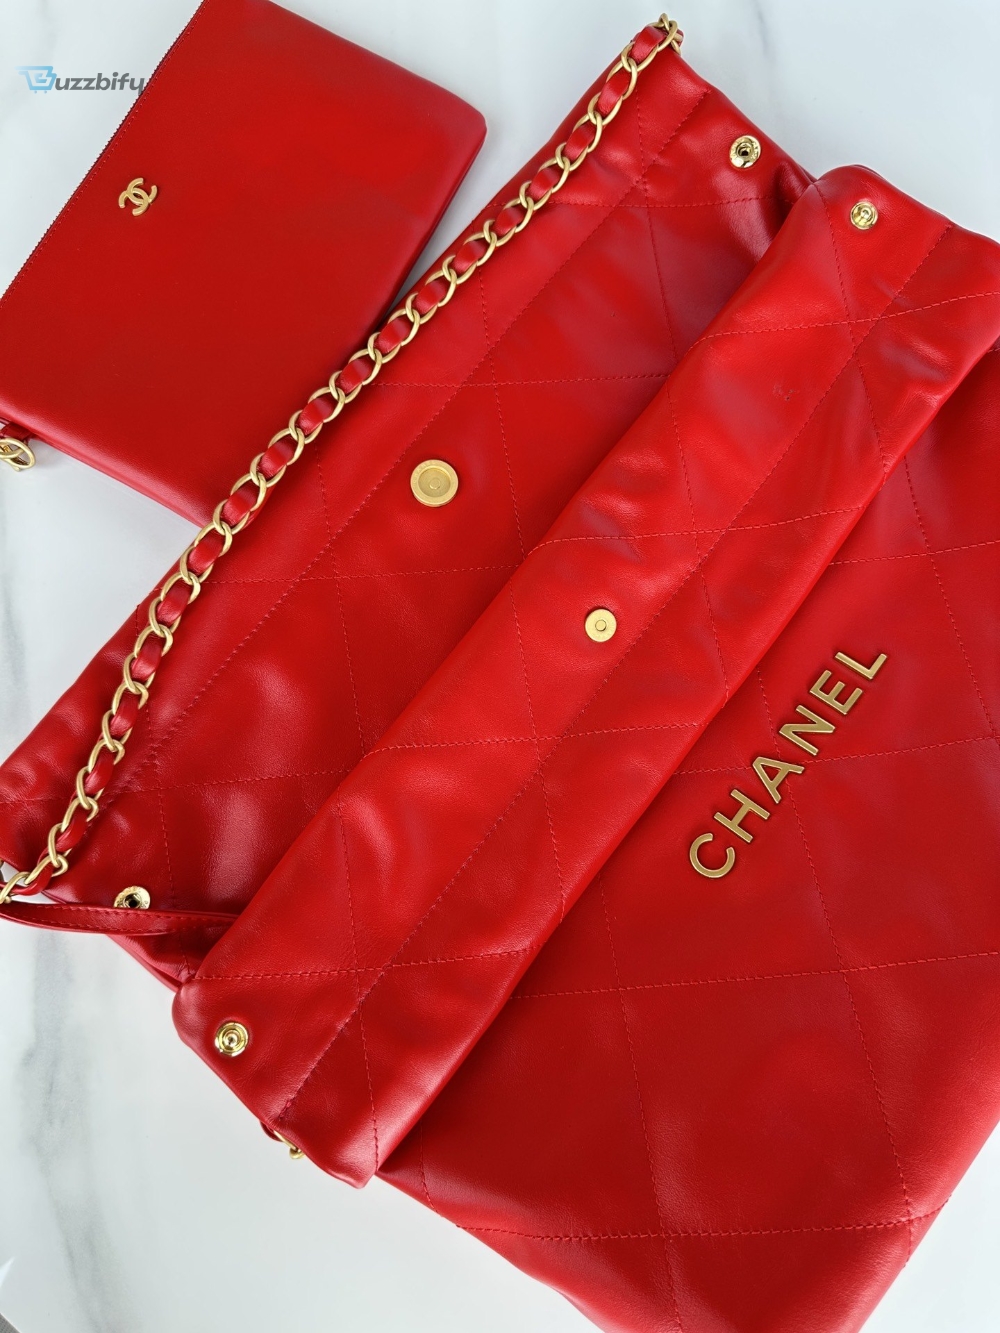 Chanel 22 Handbag Redpink For Women 39Cm  15.3In As3261